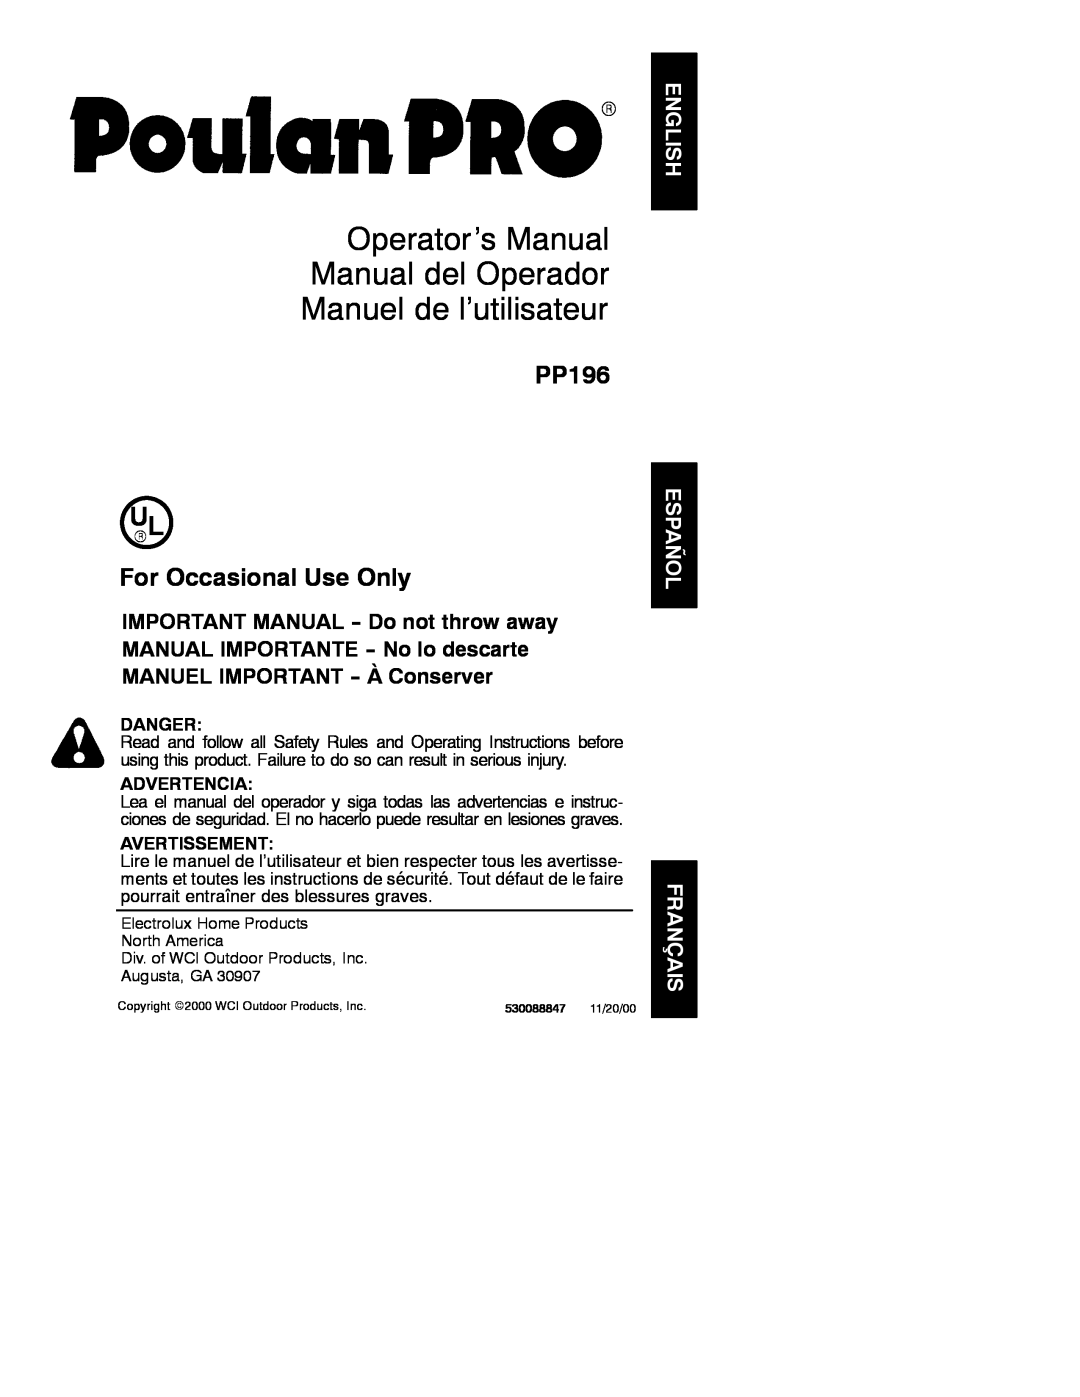 Poulan 530088847 operating instructions Operator’s Manual Manual del Operador Manuel de l’utilisateur, PP196, Danger 